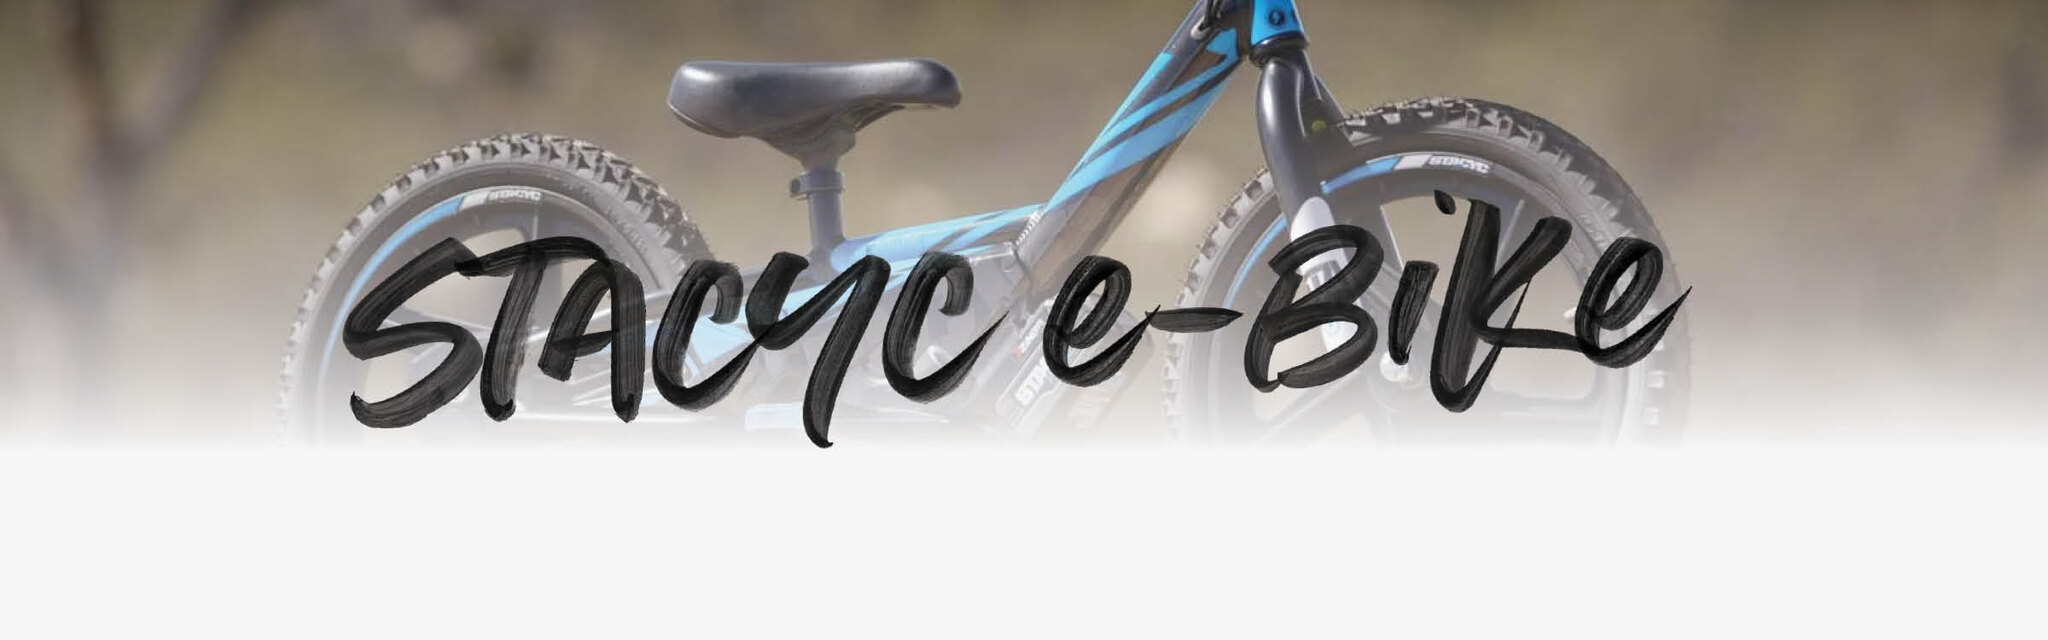 STACYC E-Bikes